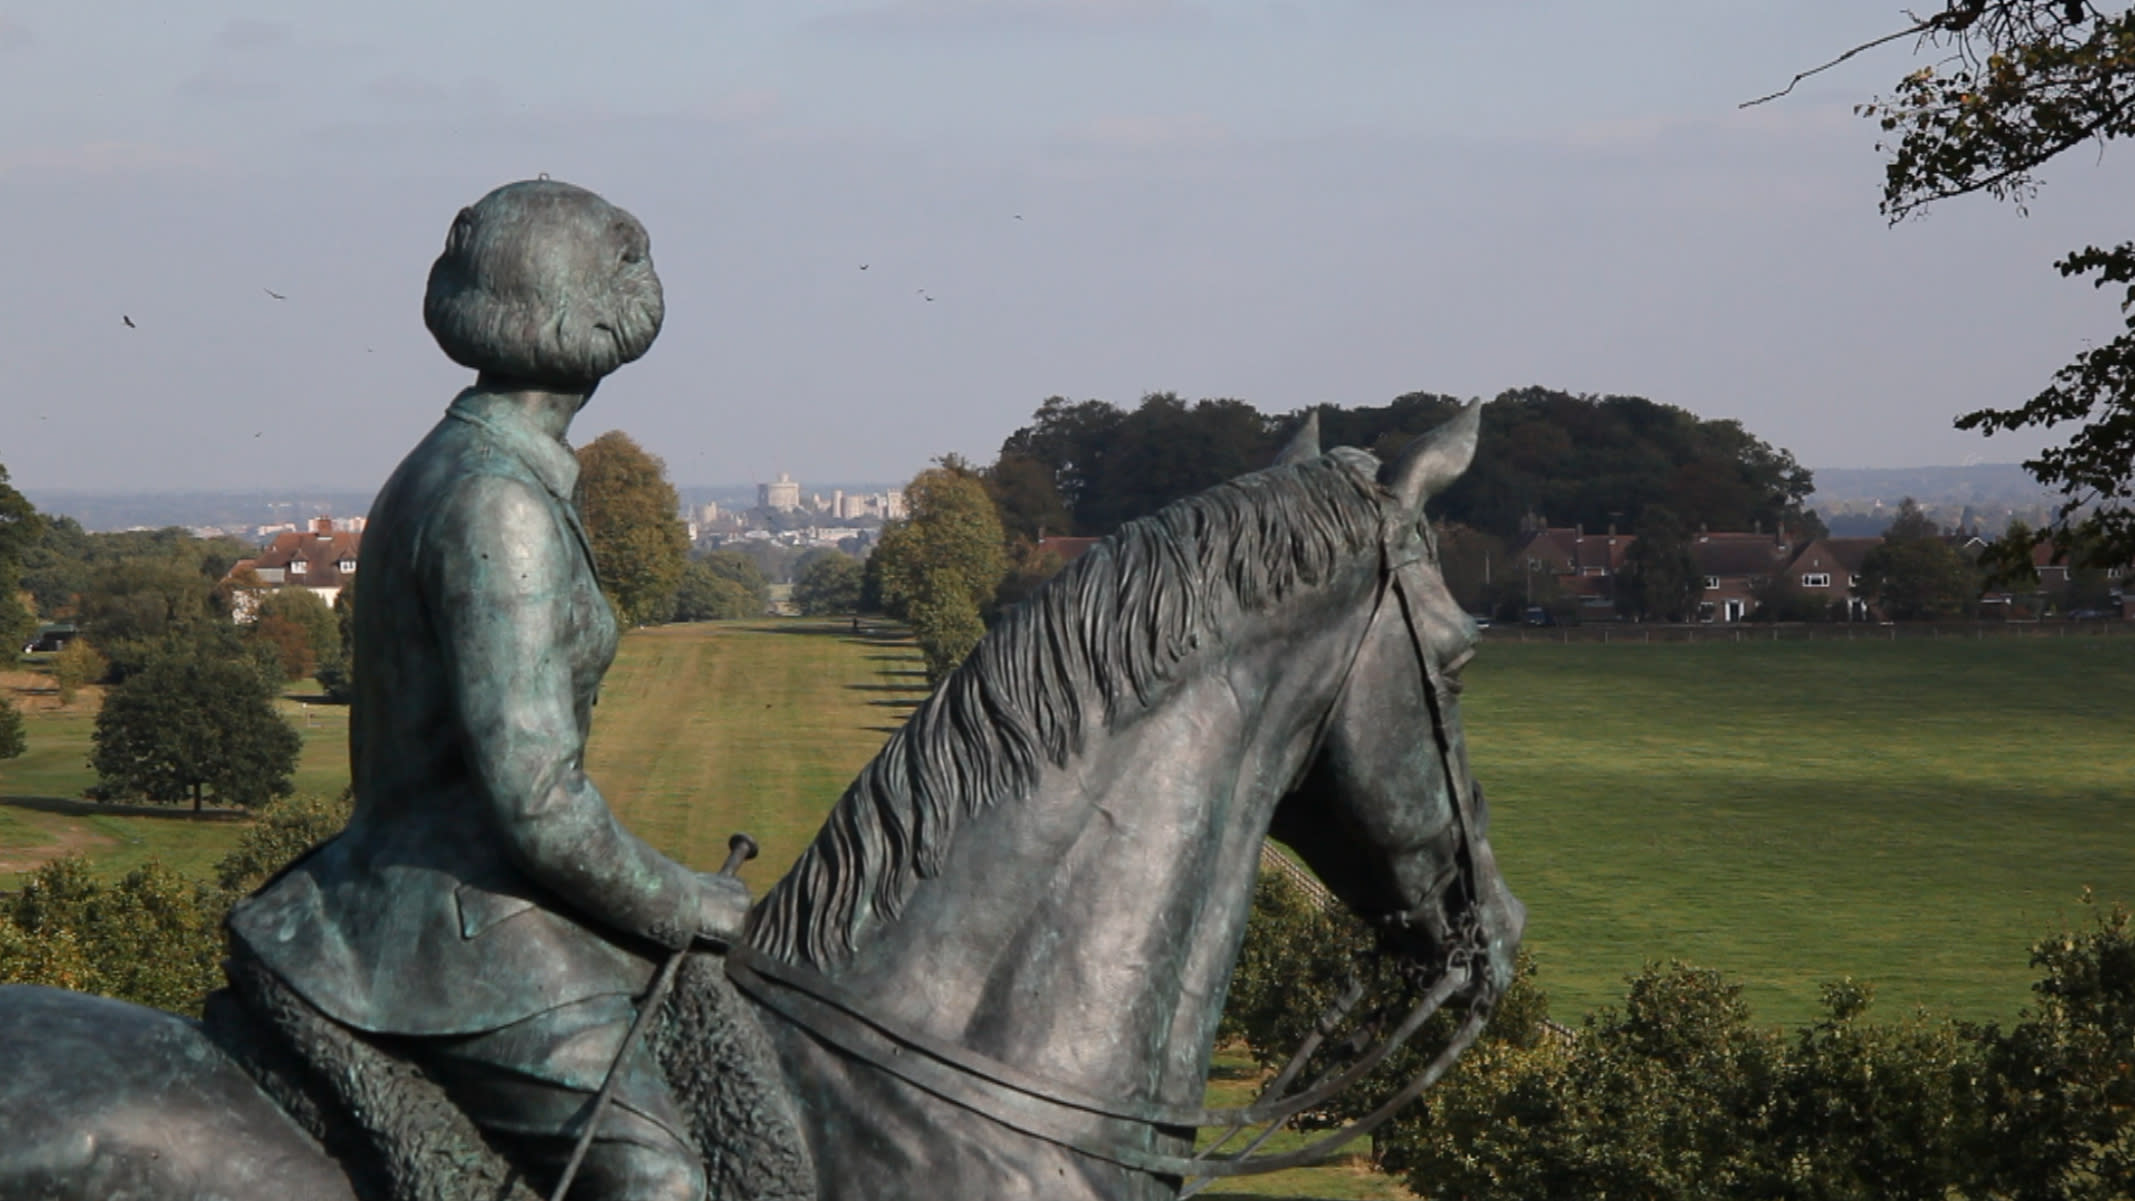 Queen's Jubilee statue at Windsor Great Park